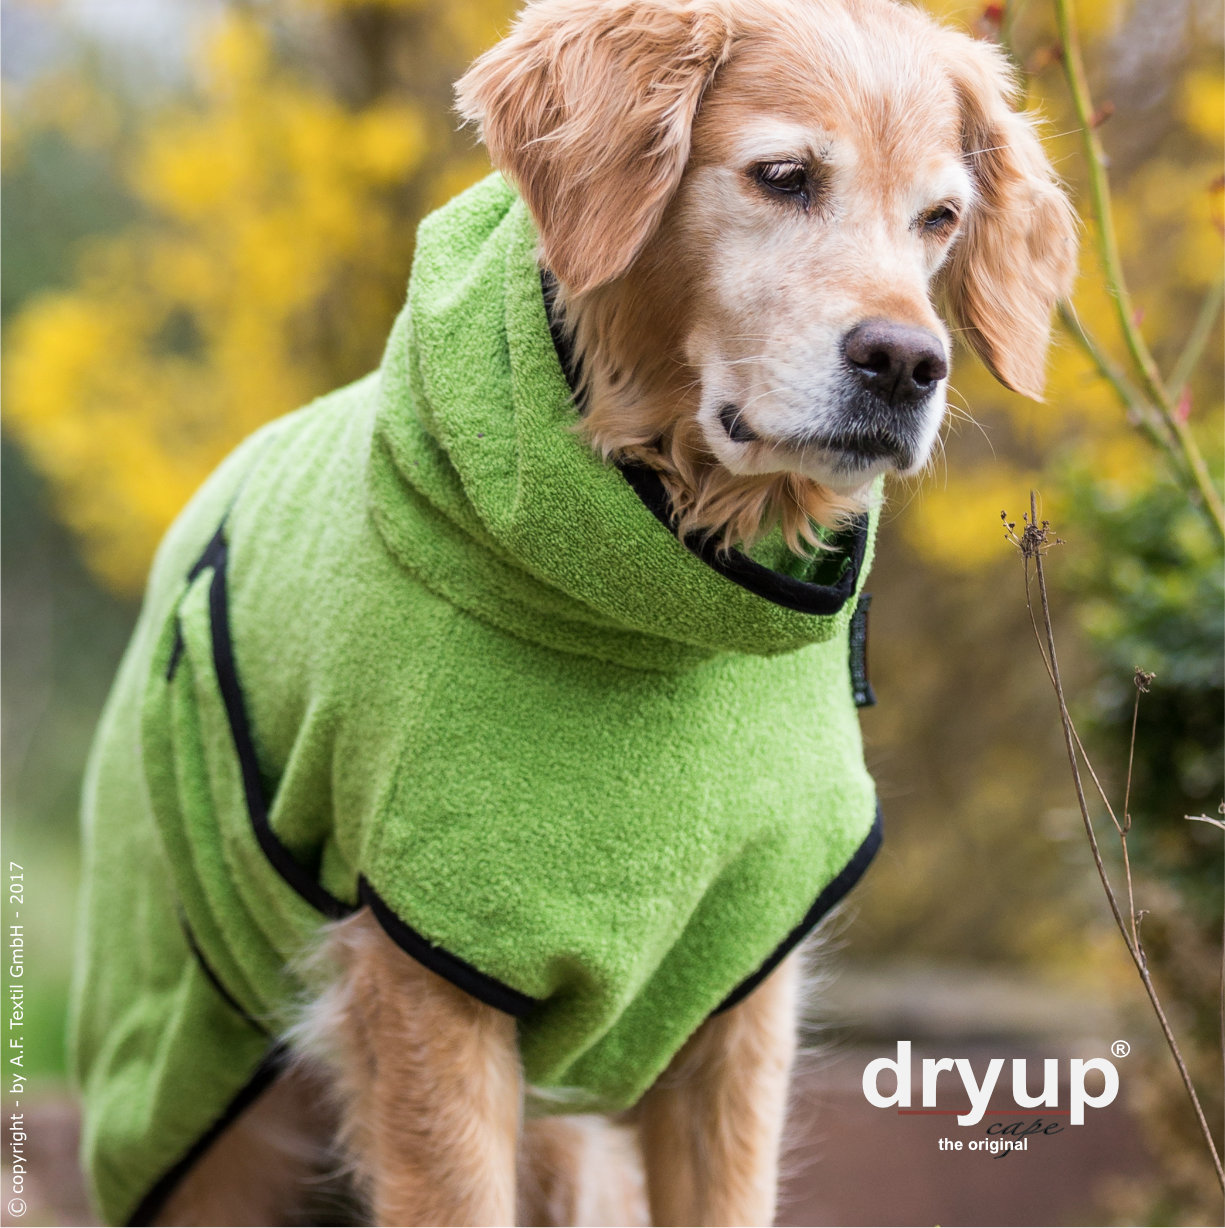 Dryup cape edition Kiwi